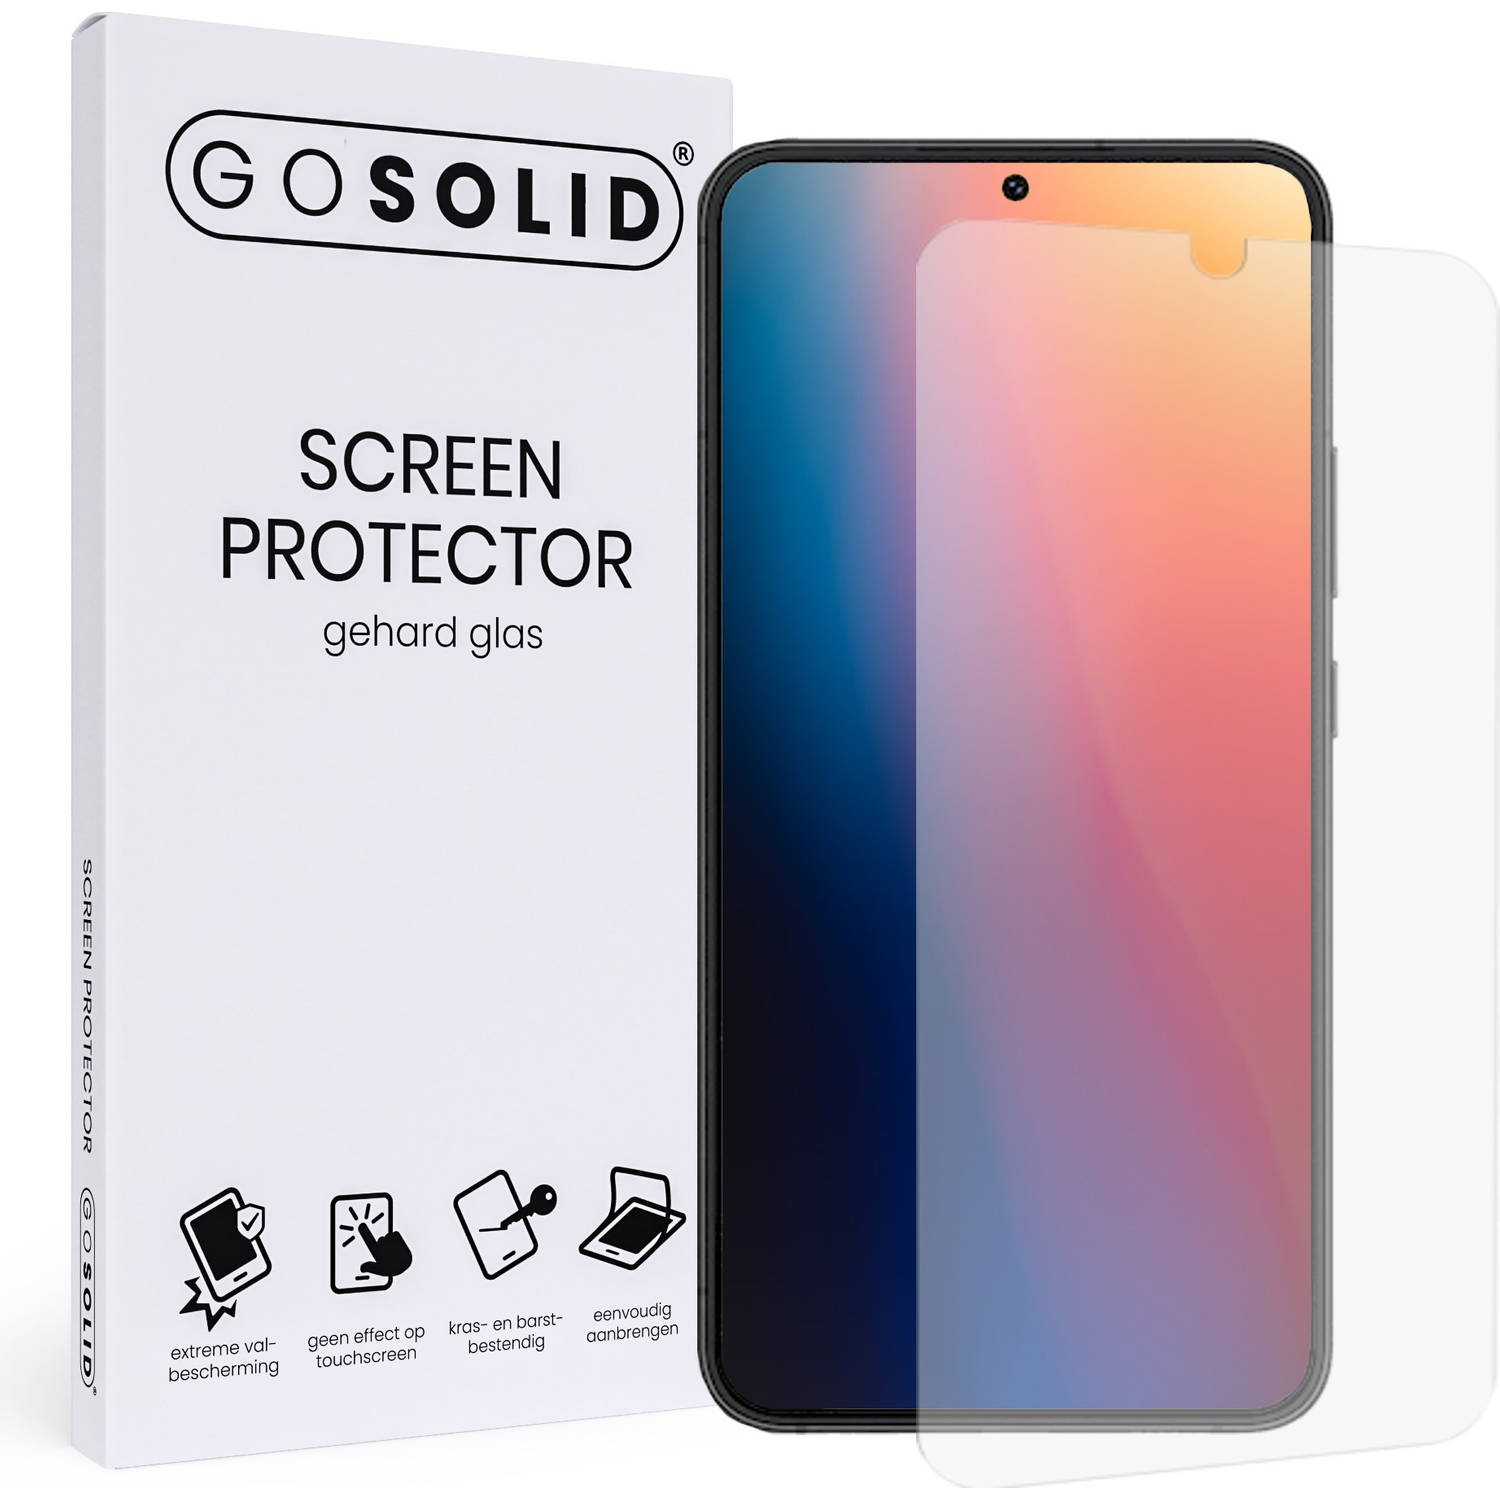 GO SOLID! Screenprotector voor Huawei P30 Pro gehard glas